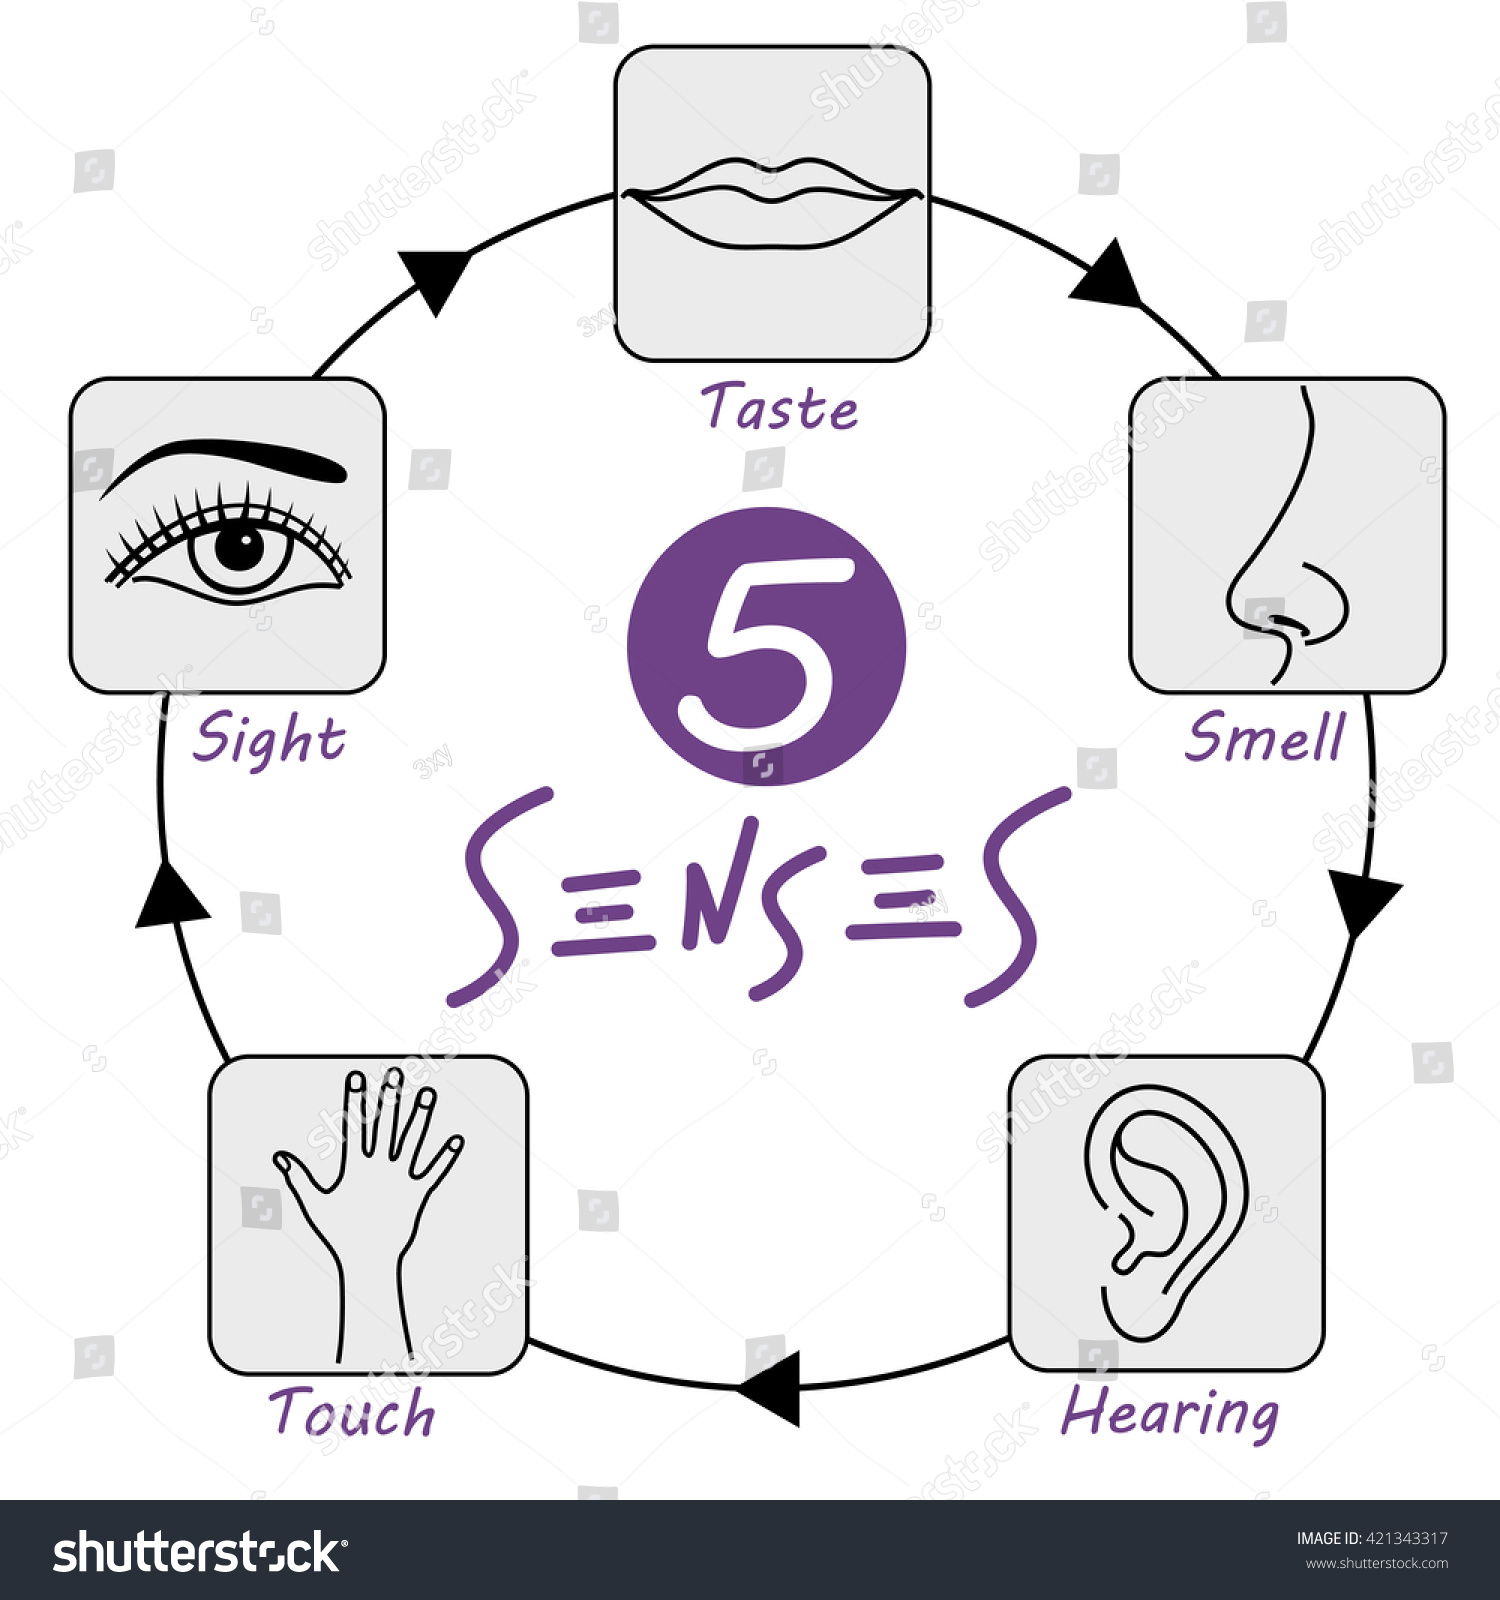 Five Senses Vector Icons Set - 421343317 : Shutterstock